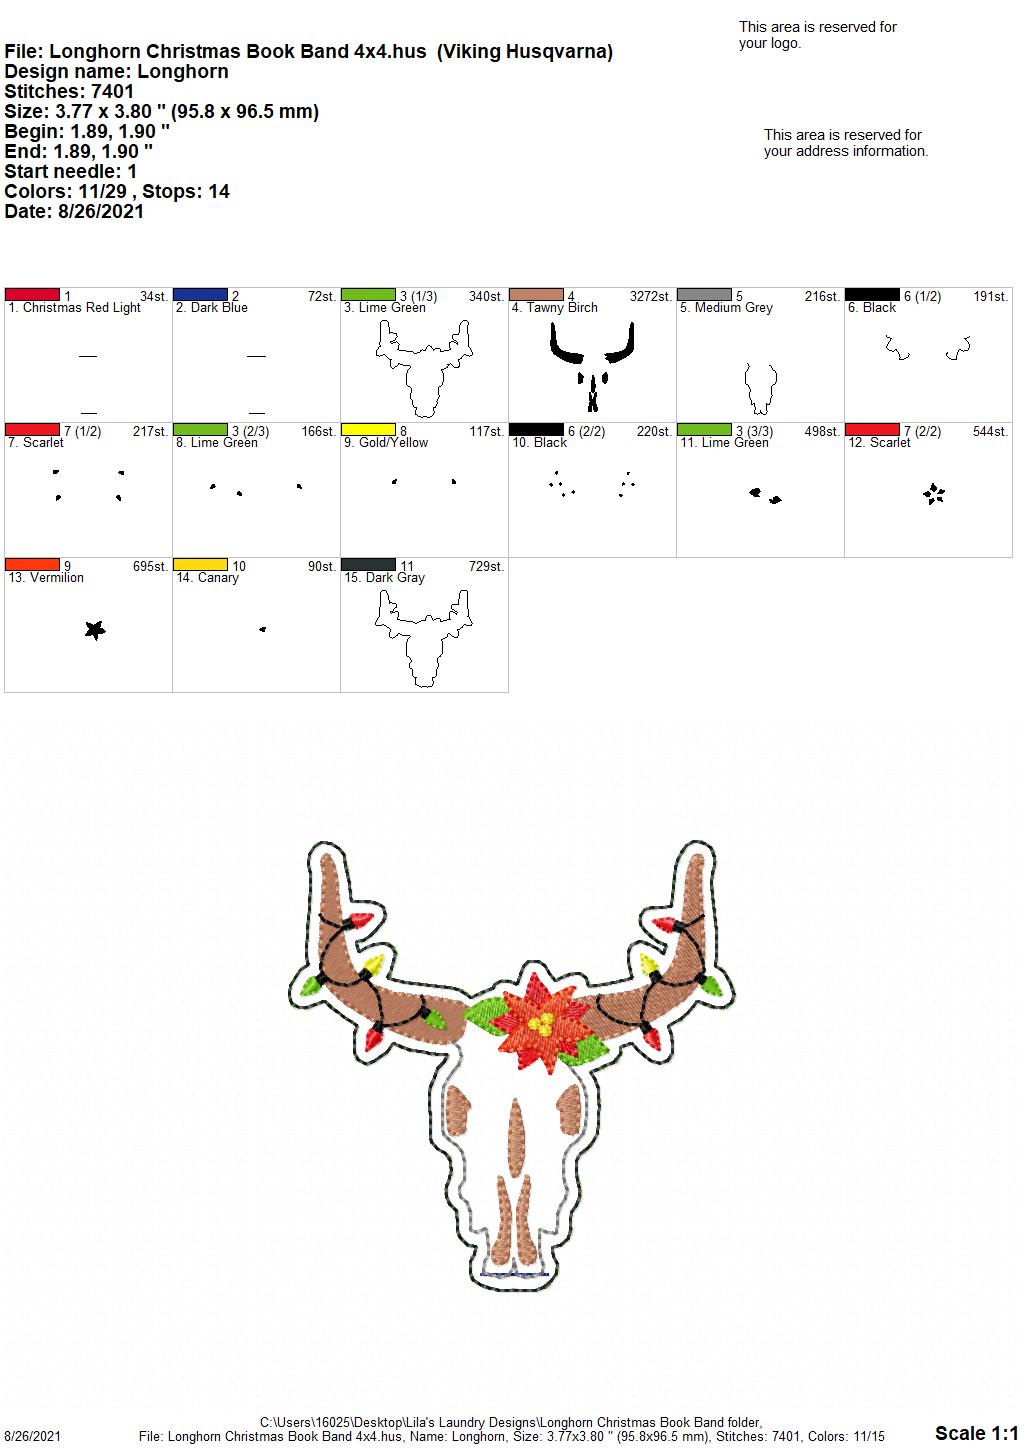 Longhorn Christmas Book Band - Embroidery Design, Digital File